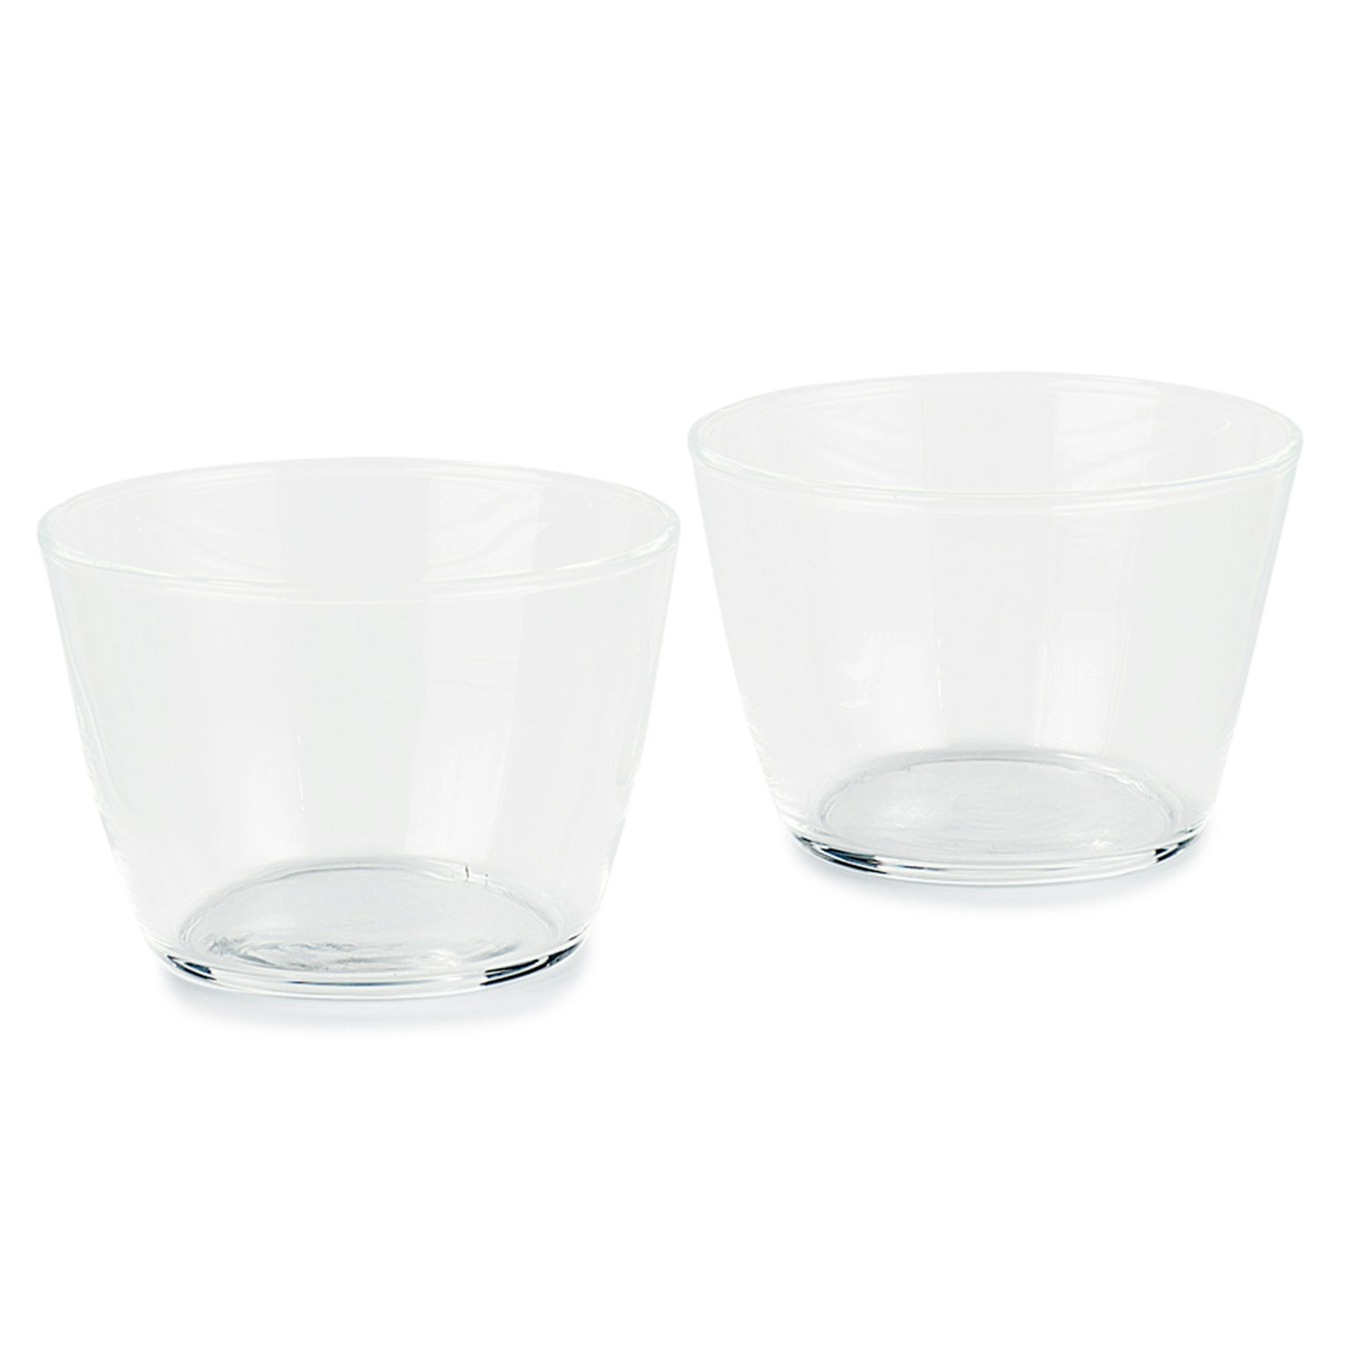 https://royaldesign.com/image/2/spring-copenhagen-double-up-2-pack-glas-92-cm-klarglas-0?w=800&quality=80